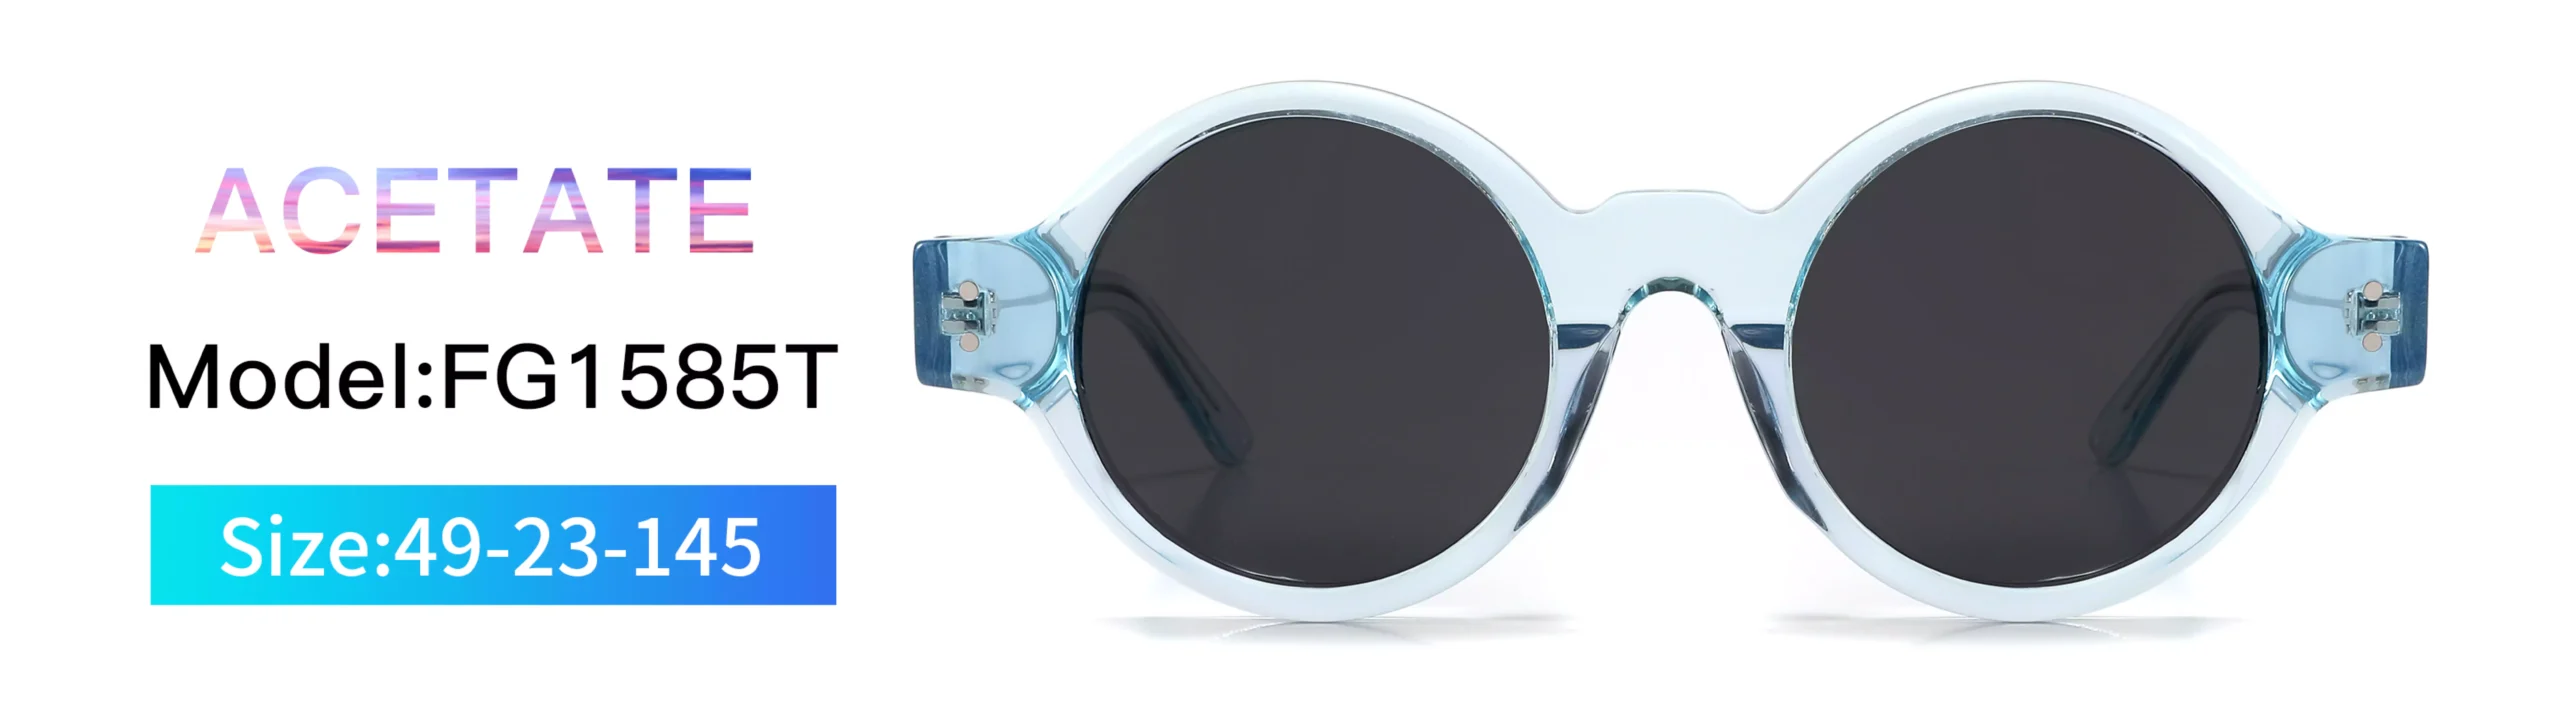 Sunglasses FG1585T, Size, Model, Acetate, Front Display, Round, transparent blue